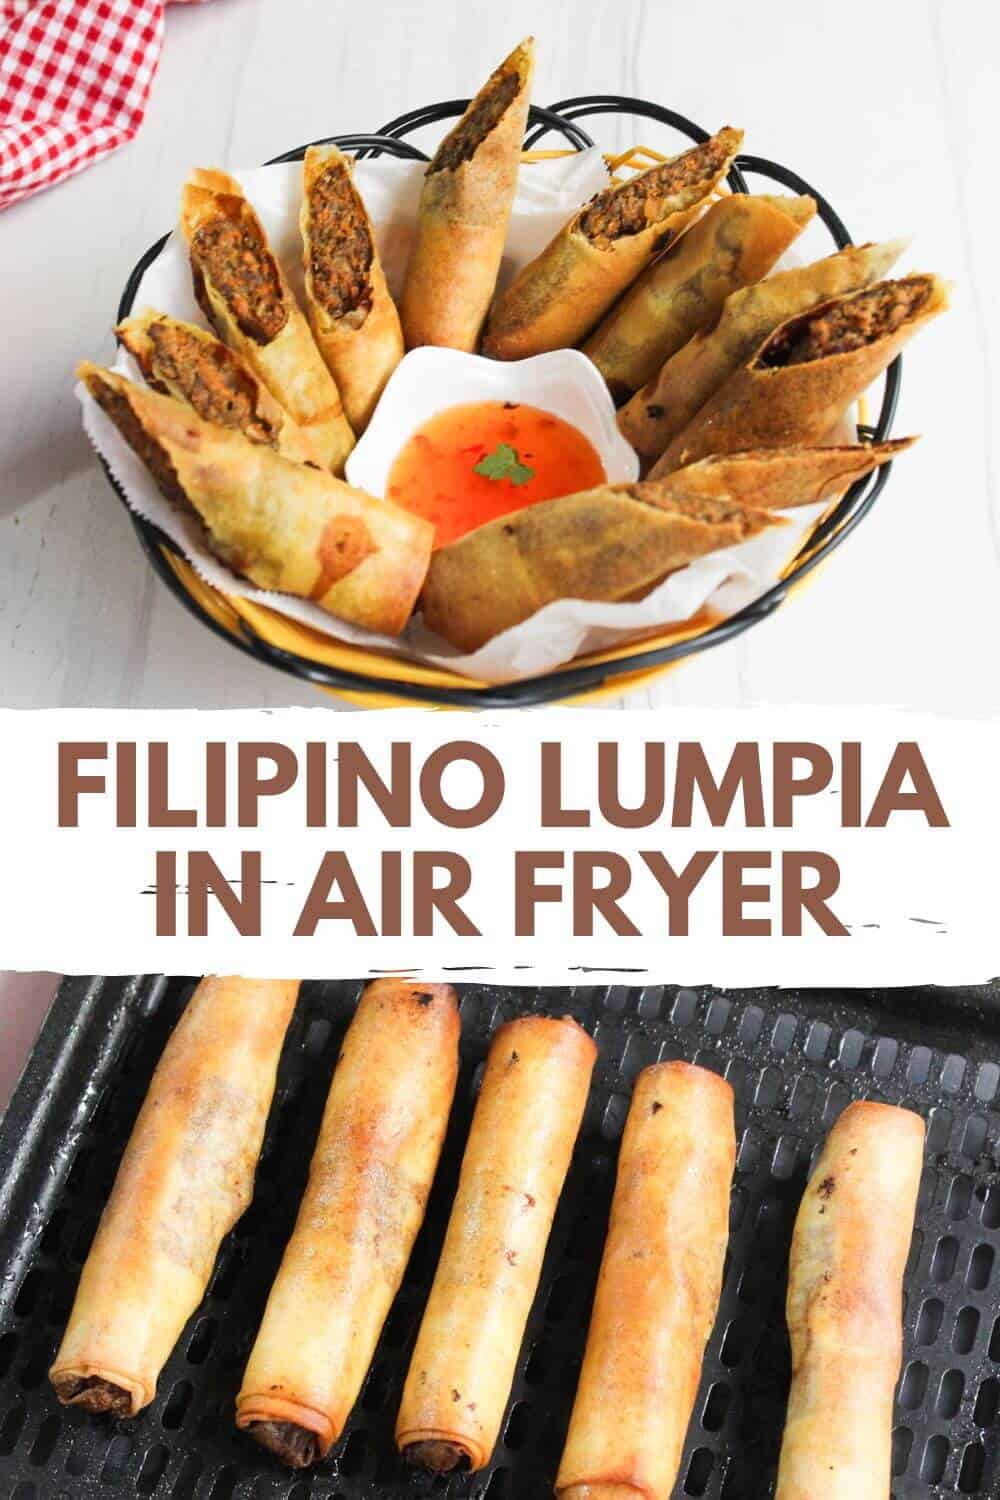 Filipino lumpia in air fryer.